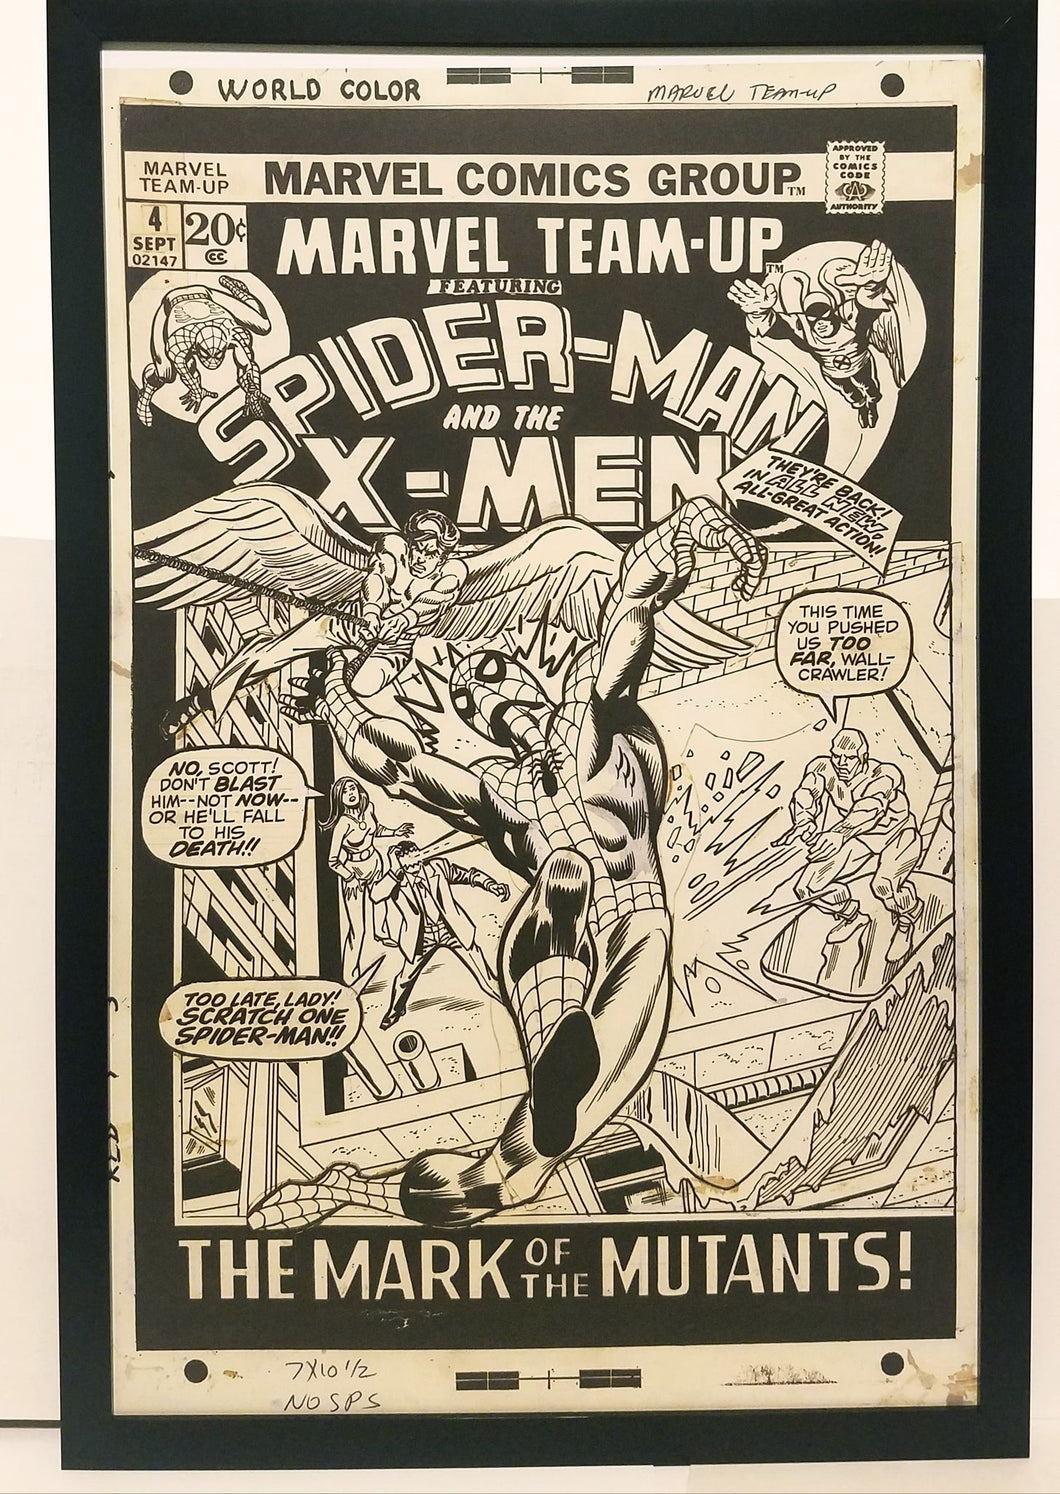 Marvel Team-Up #4 by Gil Kane 11x17 FRAMED Original Art Poster Marvel Comics